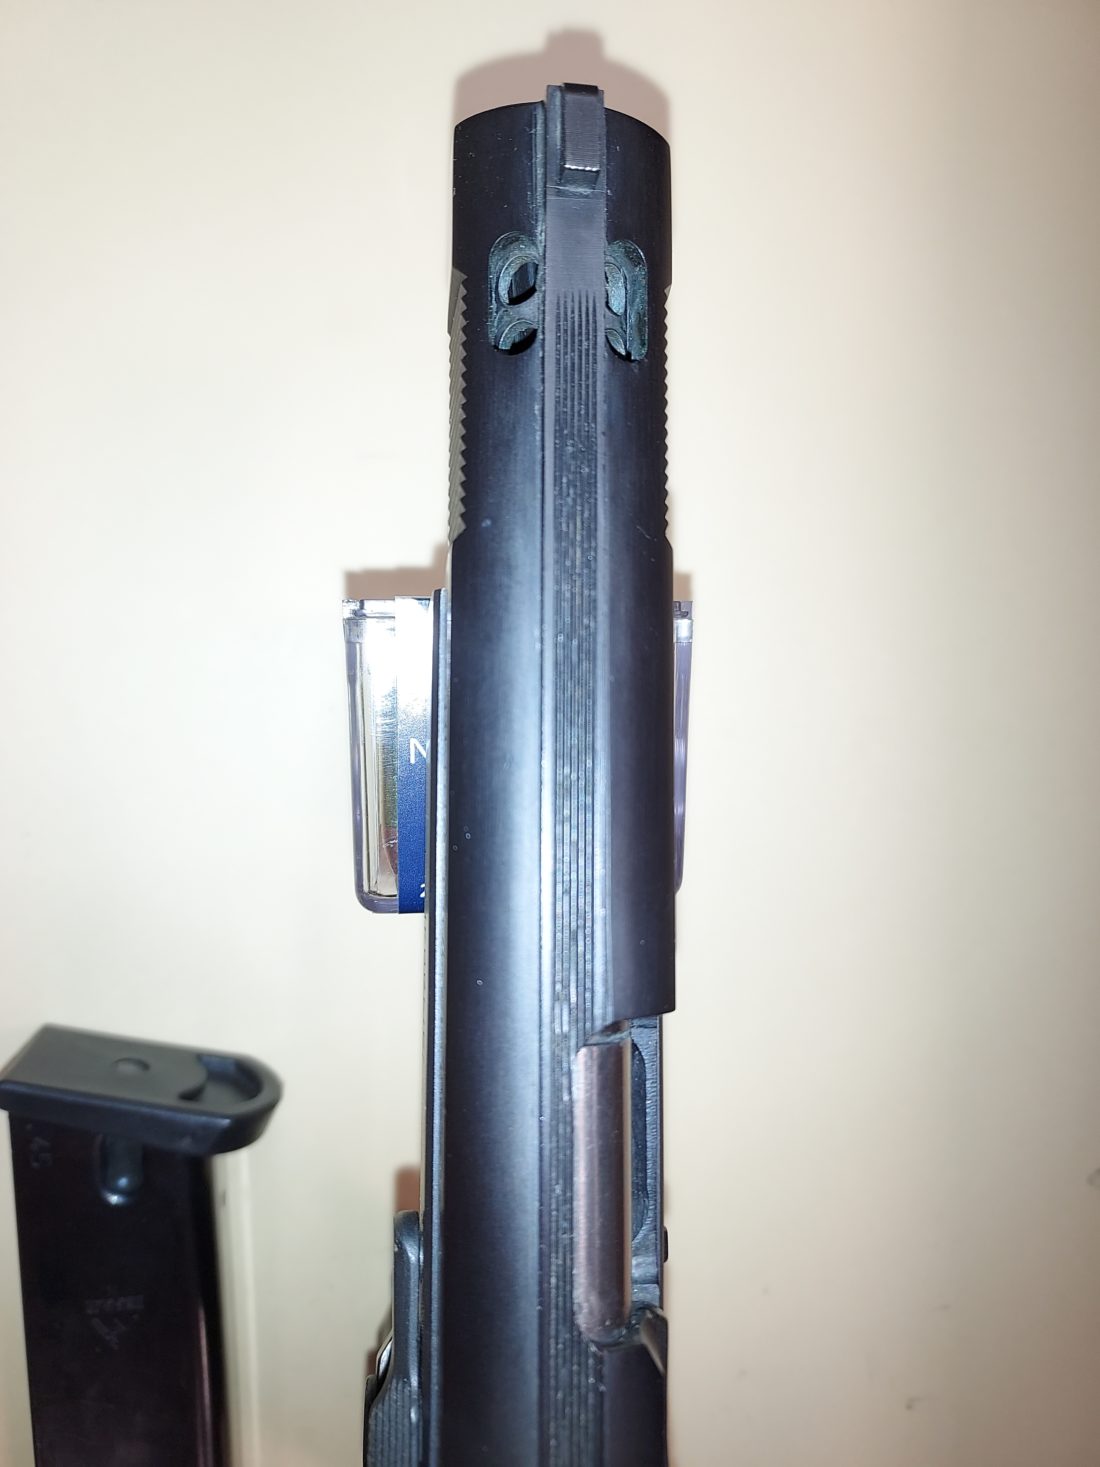 pistolet semi automatique TANFOGLIO modèle IPSC ULTRA calibre .45 ACP